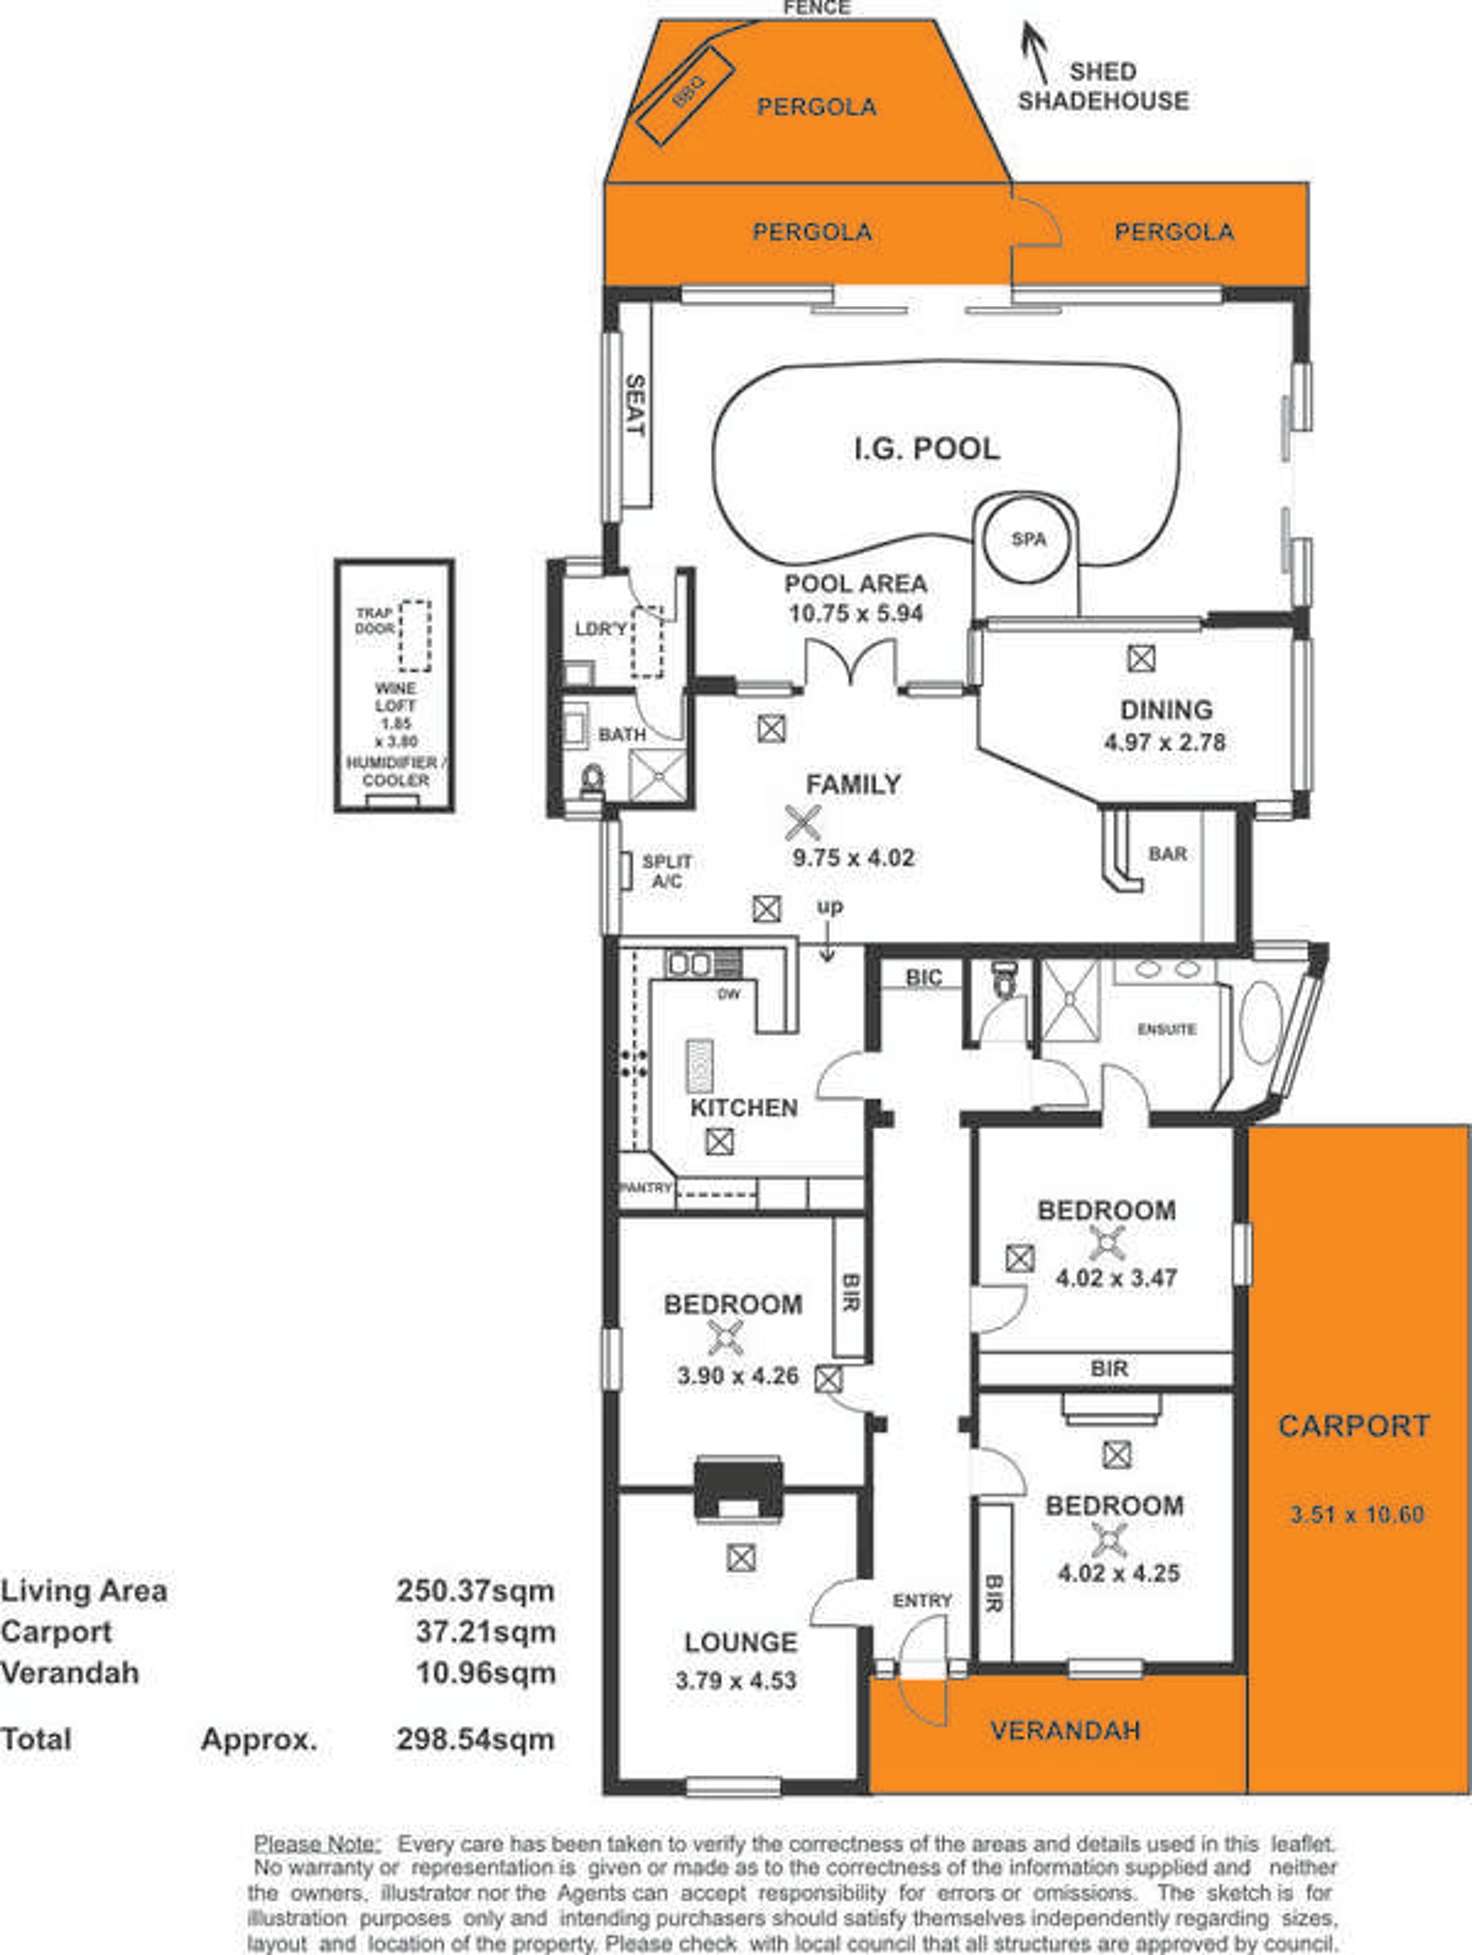 Floorplan of Homely house listing, 1 Bakewell Road, Evandale SA 5069